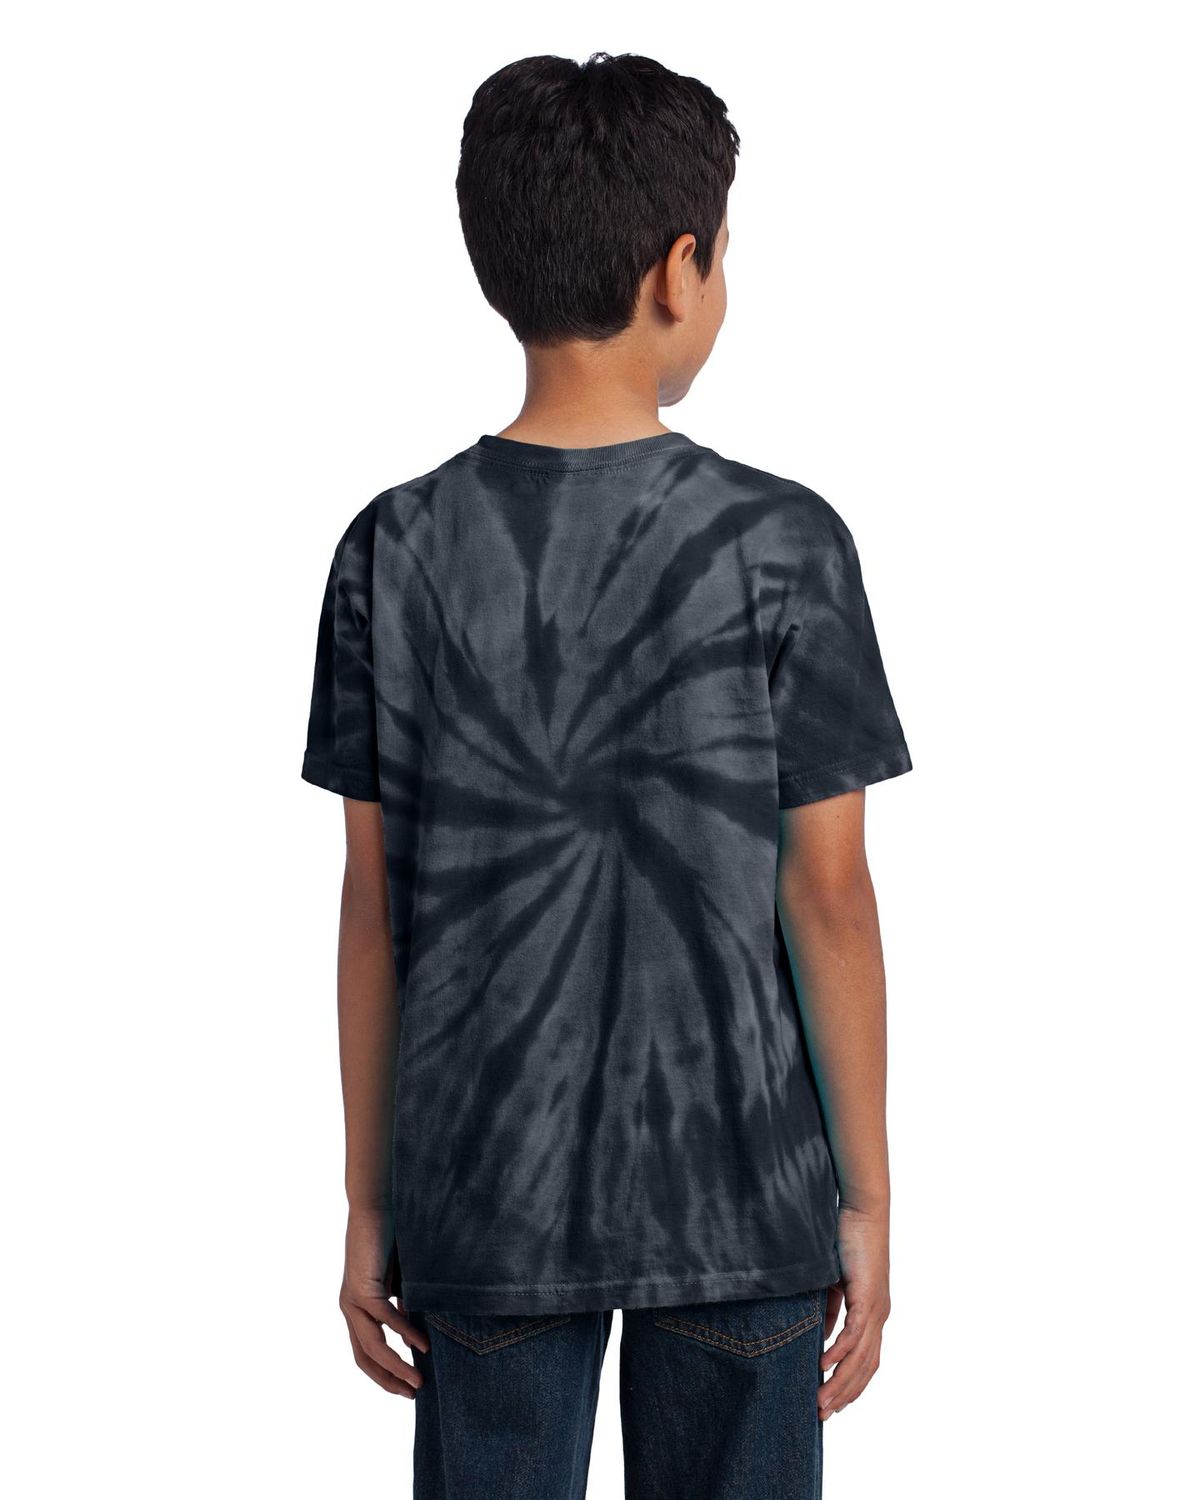 'Port & Company PC147Y Youth 5.4 oz Tie Dye T-Shirt'